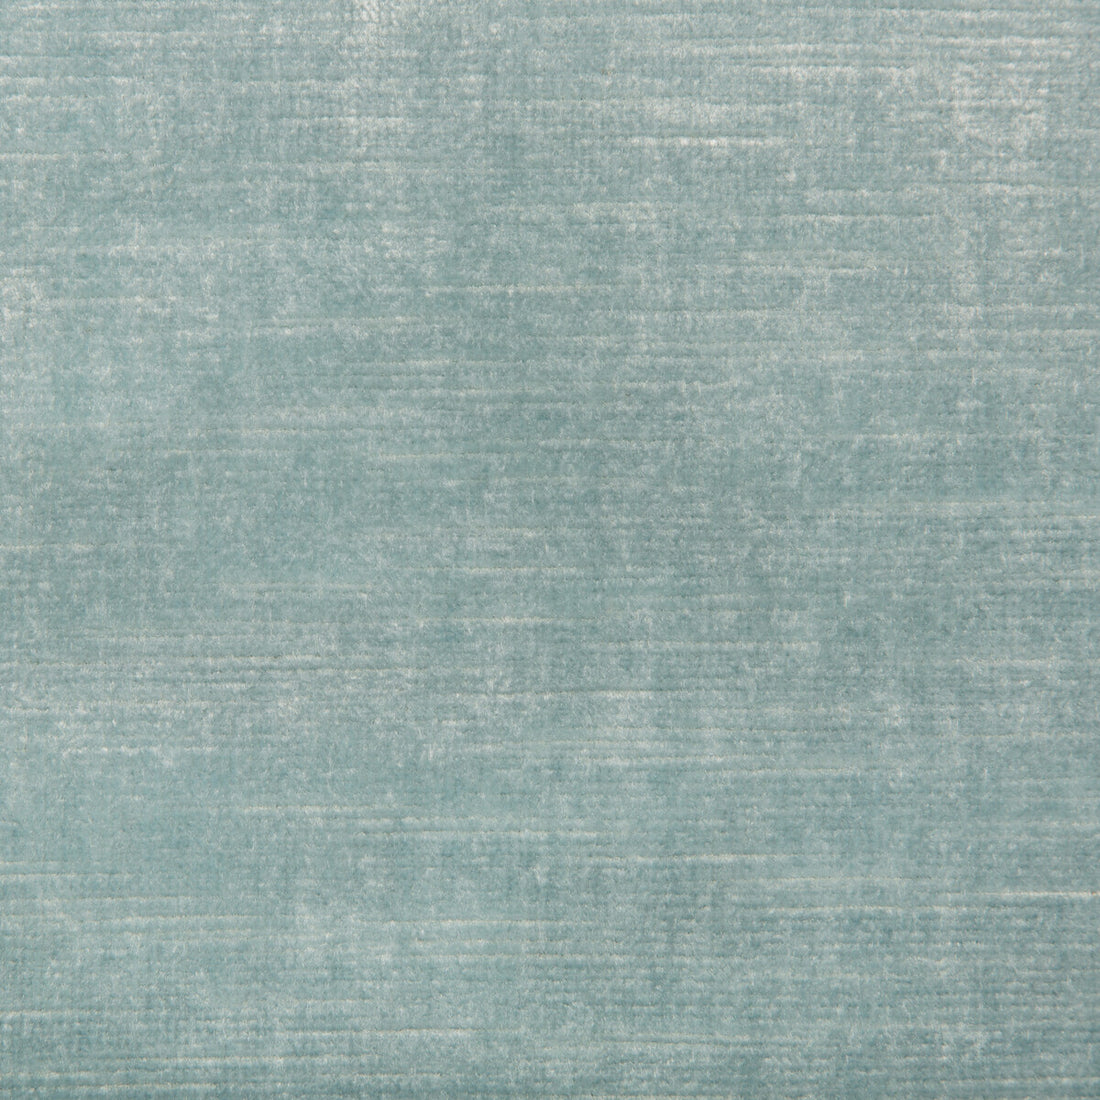 Venetian fabric in glacier color - pattern 31326.313.0 - by Kravet Design